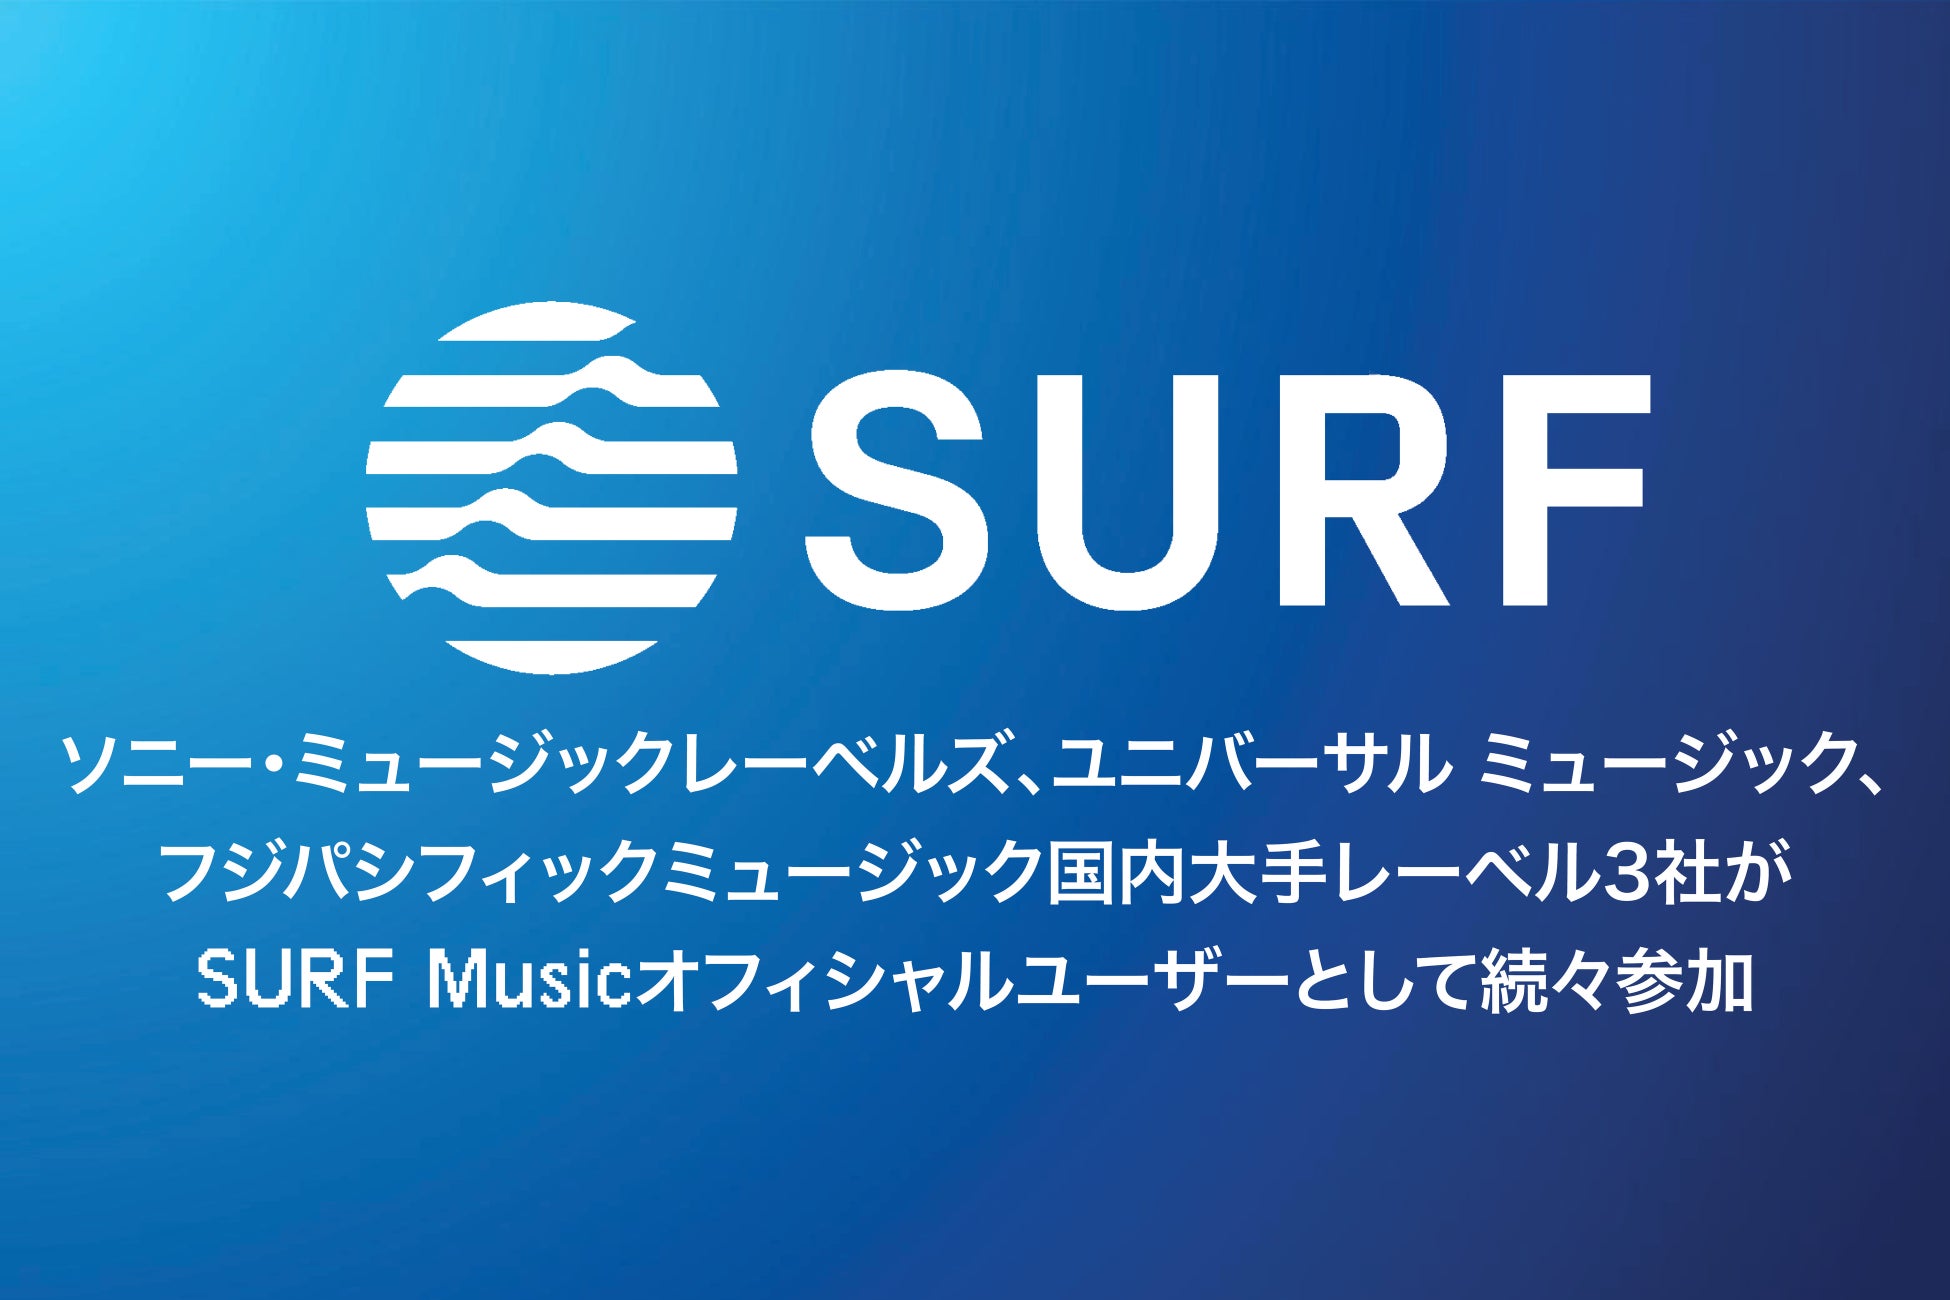 SURF Musicに国内大手レーベルがオフィシャルユーザーとして続々参加